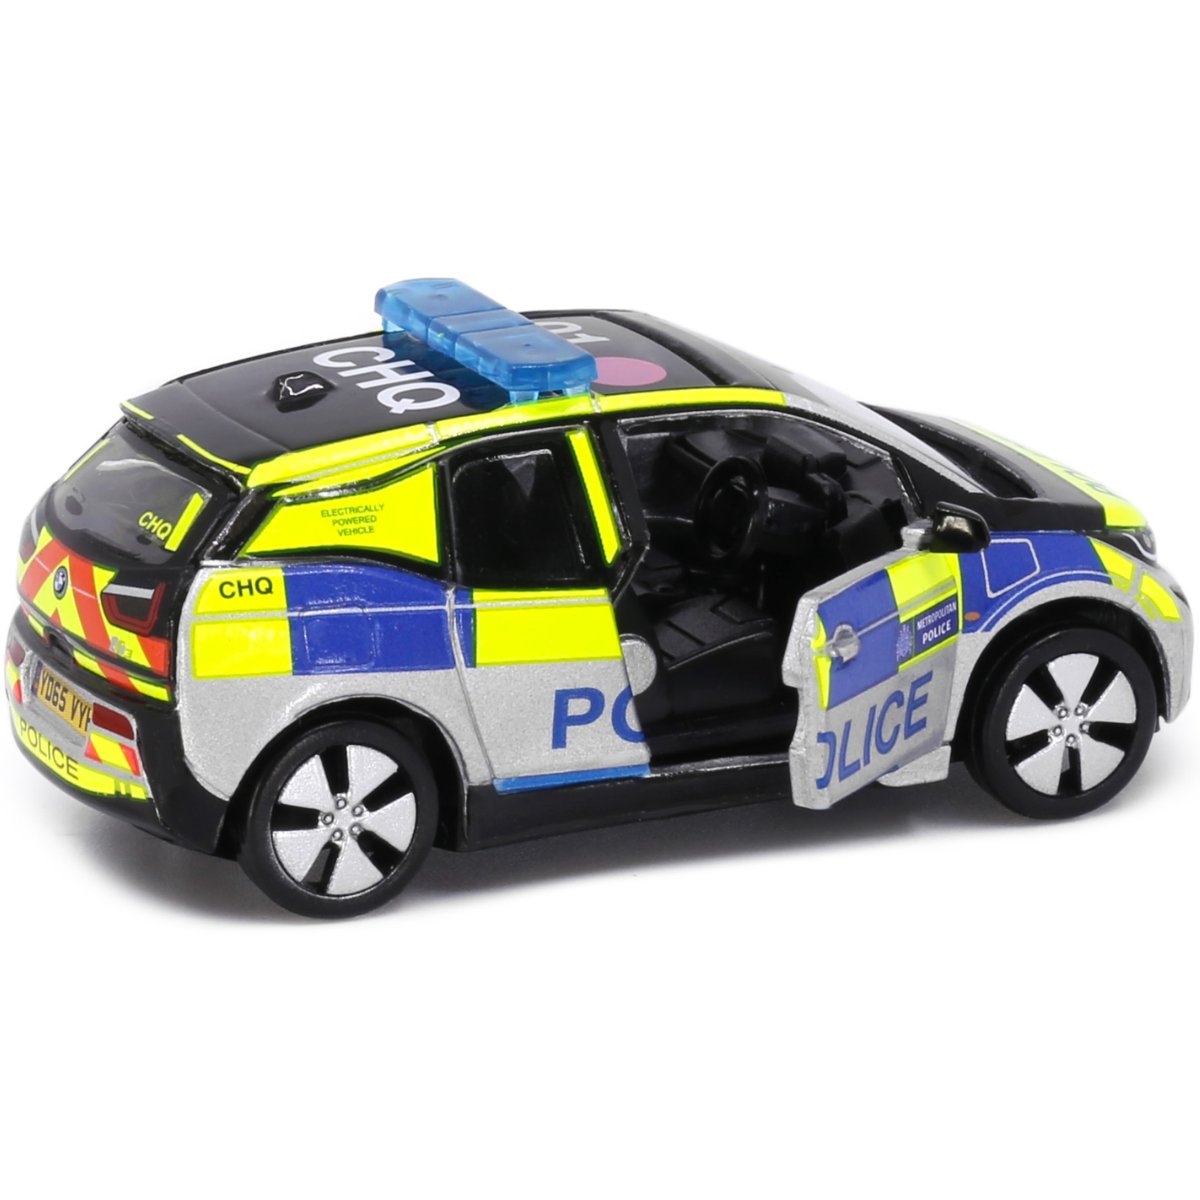 Tiny Models UK15 BMW i3 Metropolitan Police Car (1:64 Scale) - Phillips Hobbies